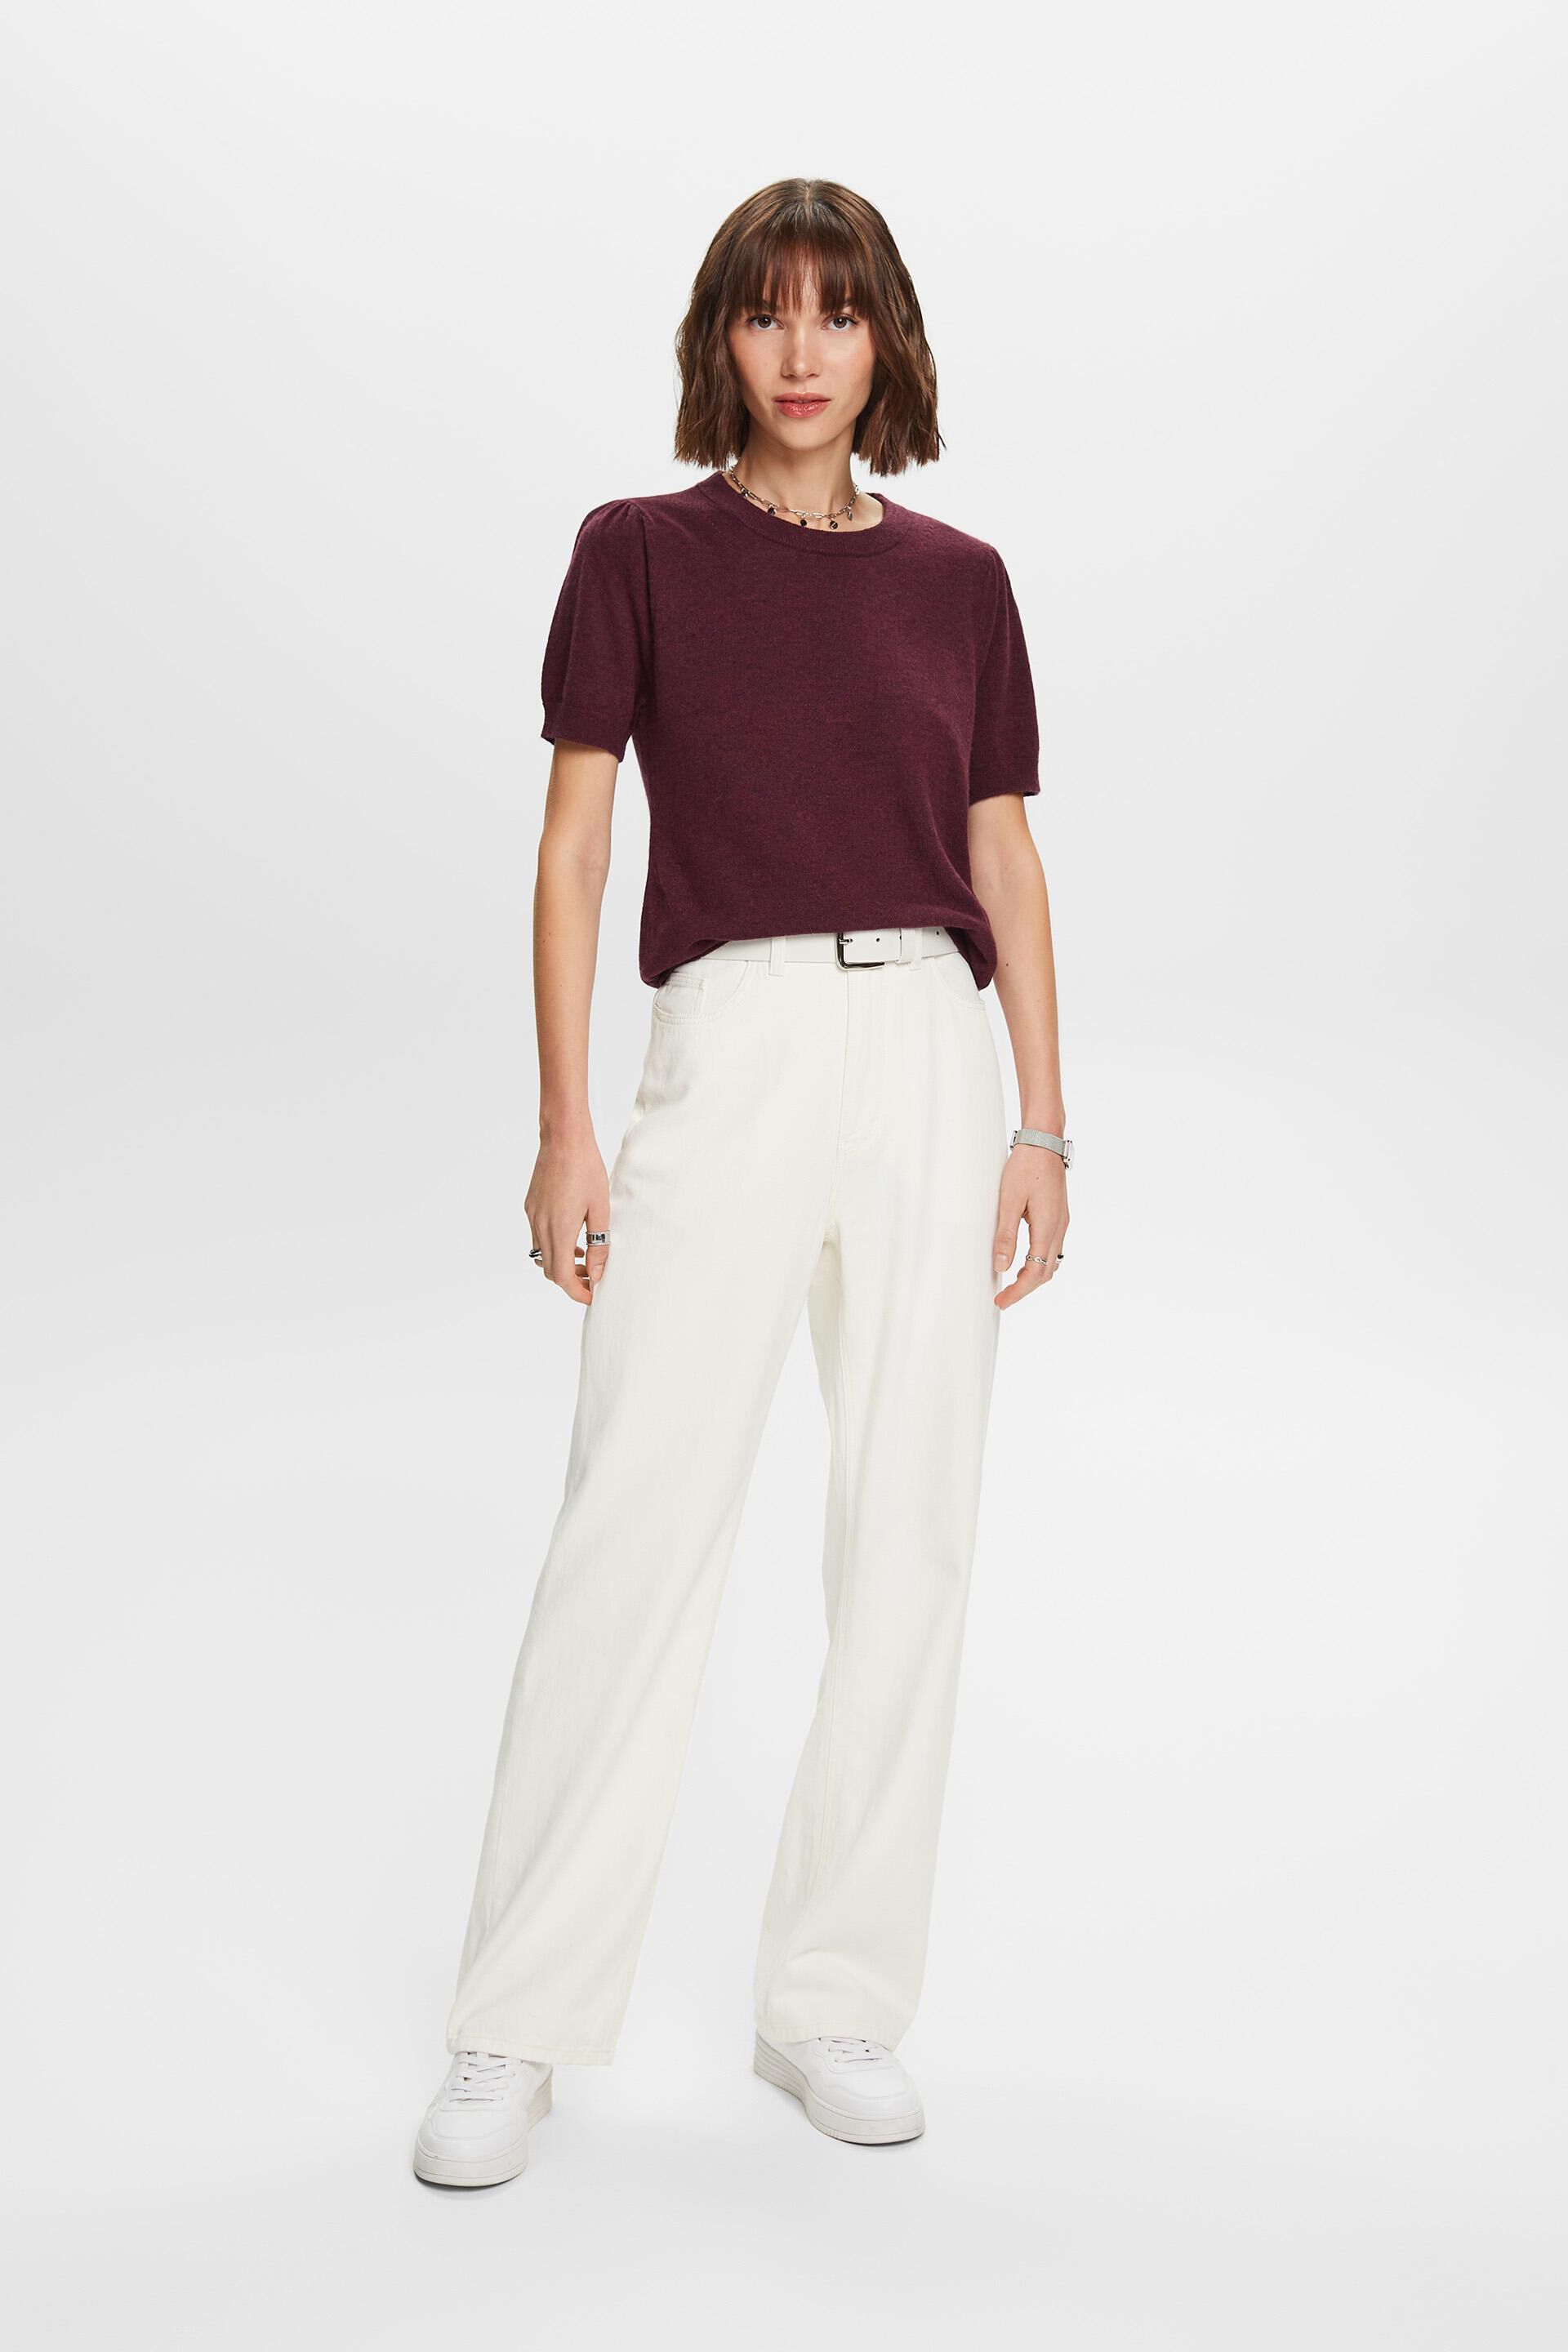 Esprit jumper short With sleeve cashmere: